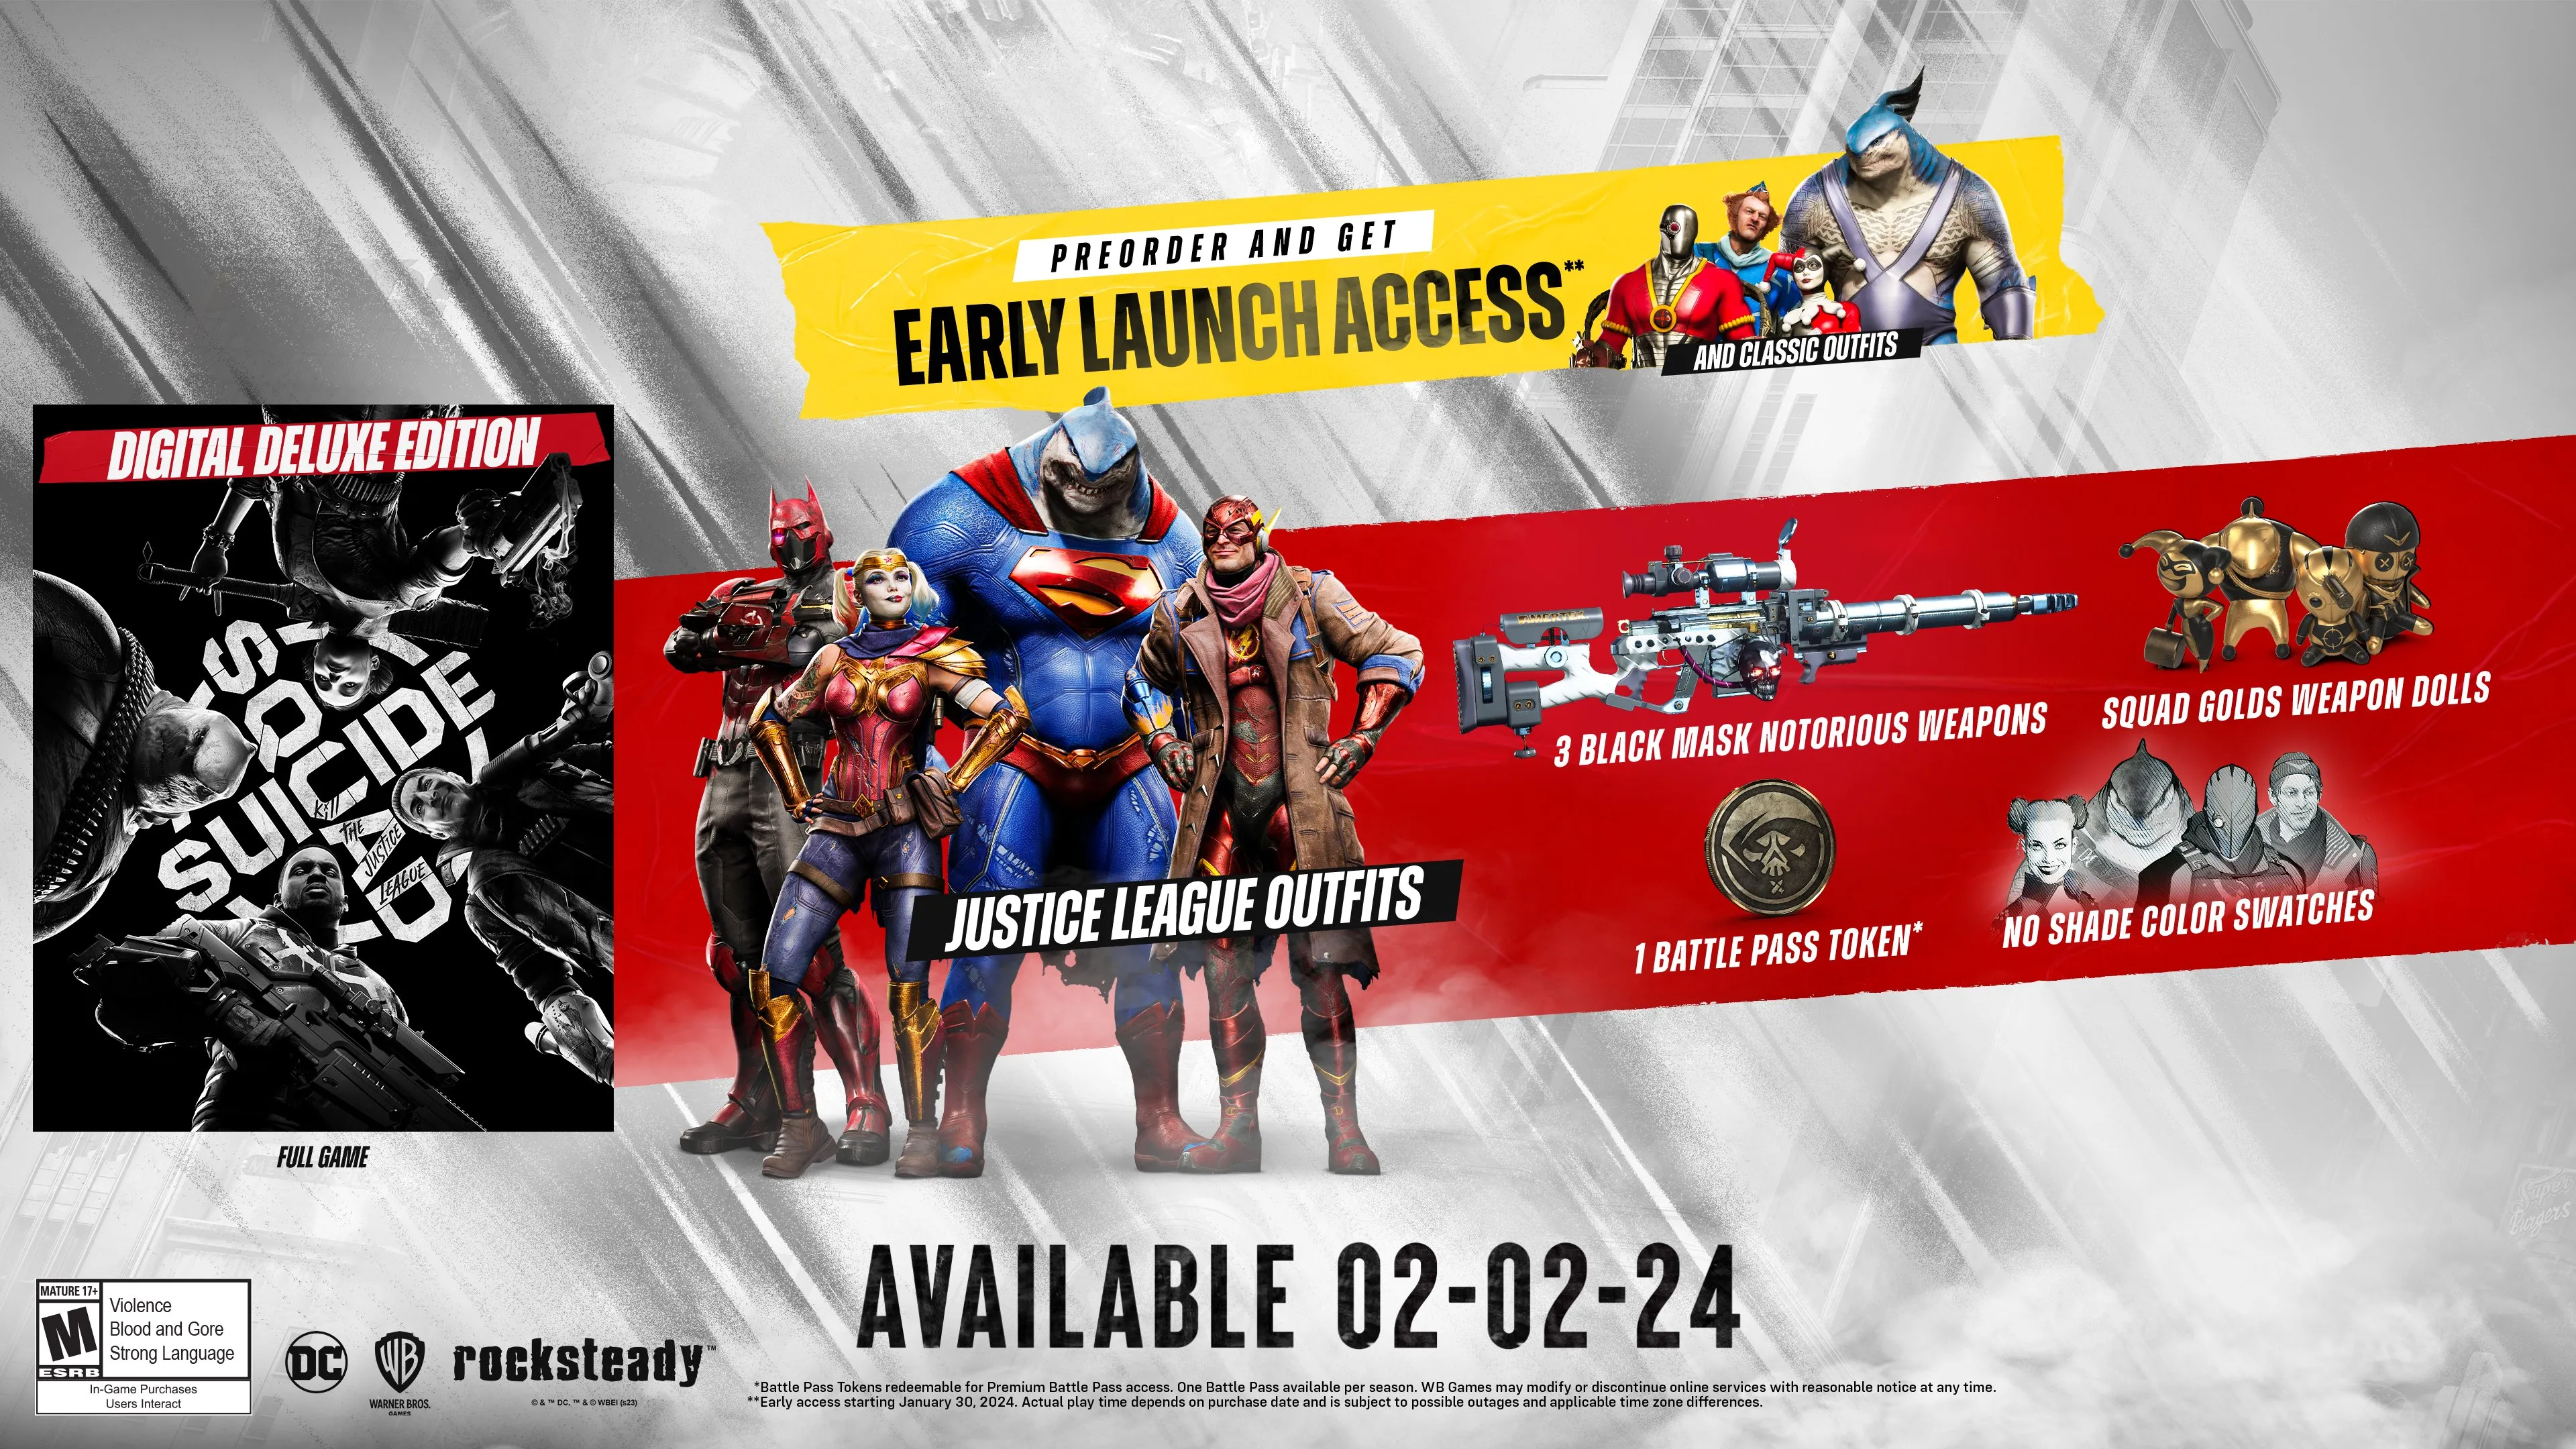 Pre-Purchase & Pre-Order Suicide Squad: Kill the Justice League - Epic  Games Store